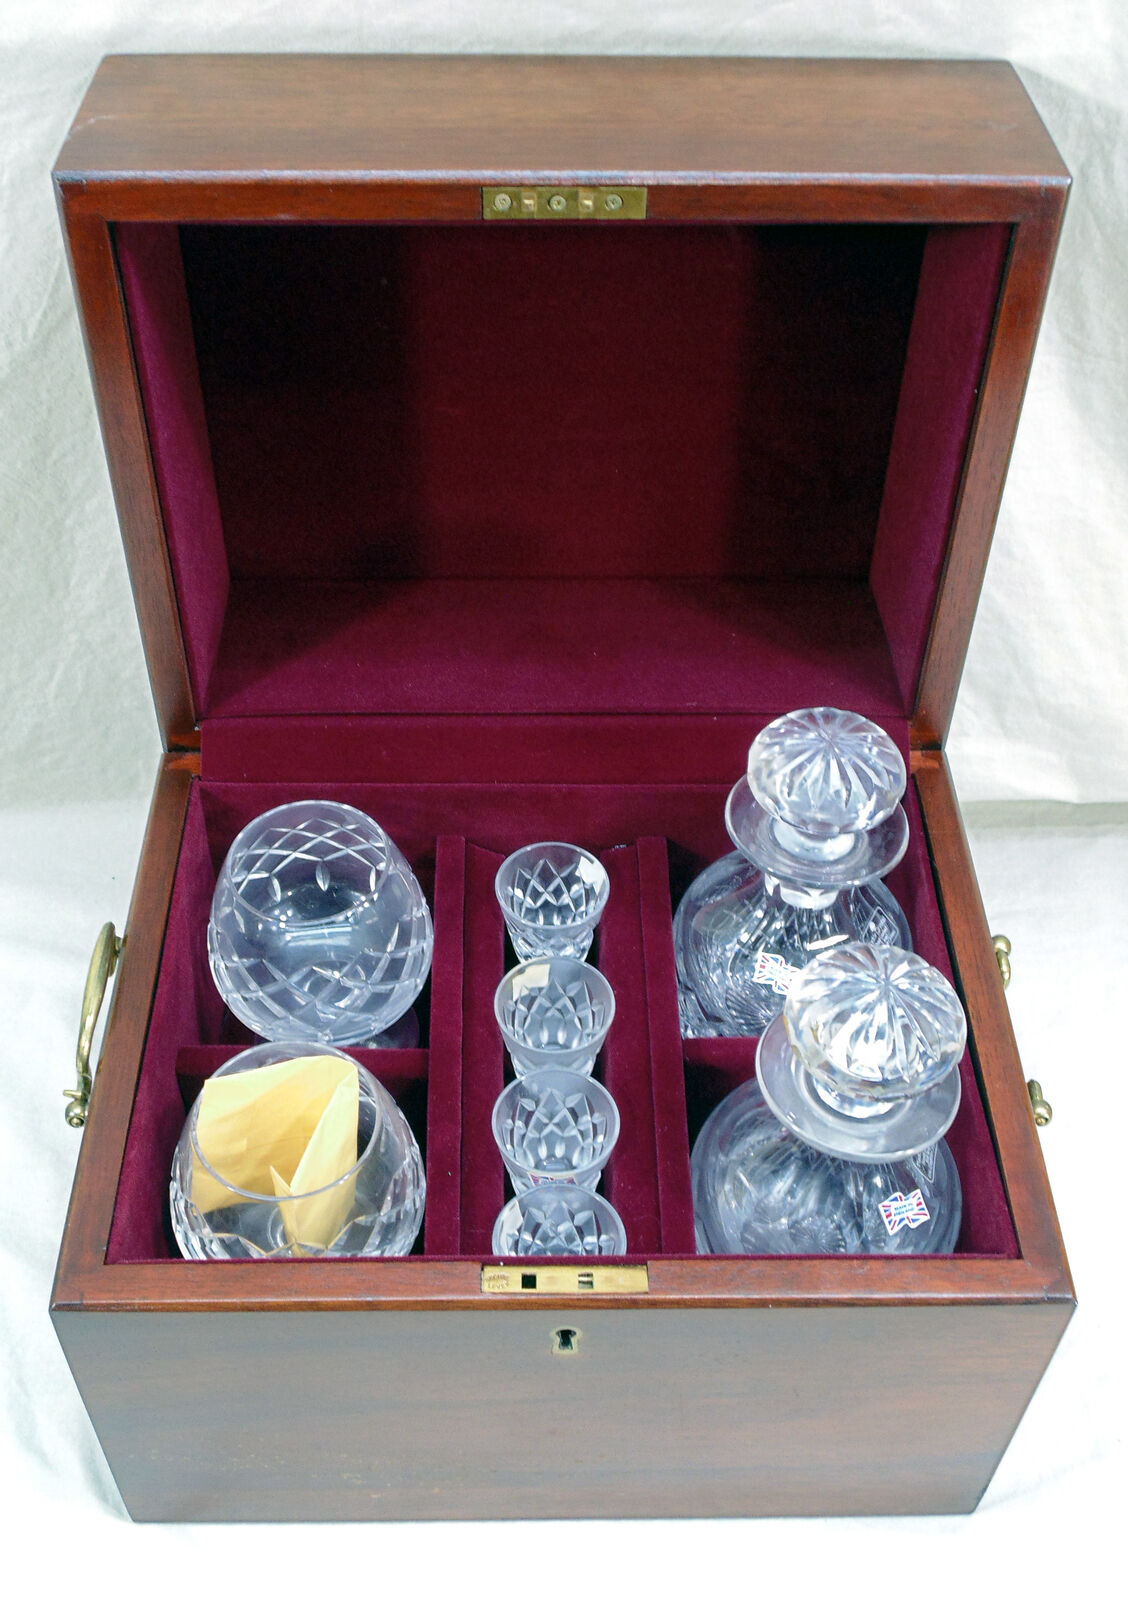 Cartier Tudor Crystal Liquor Cabinet Whiskey Decanter Cordial Cognac Glasses Bar